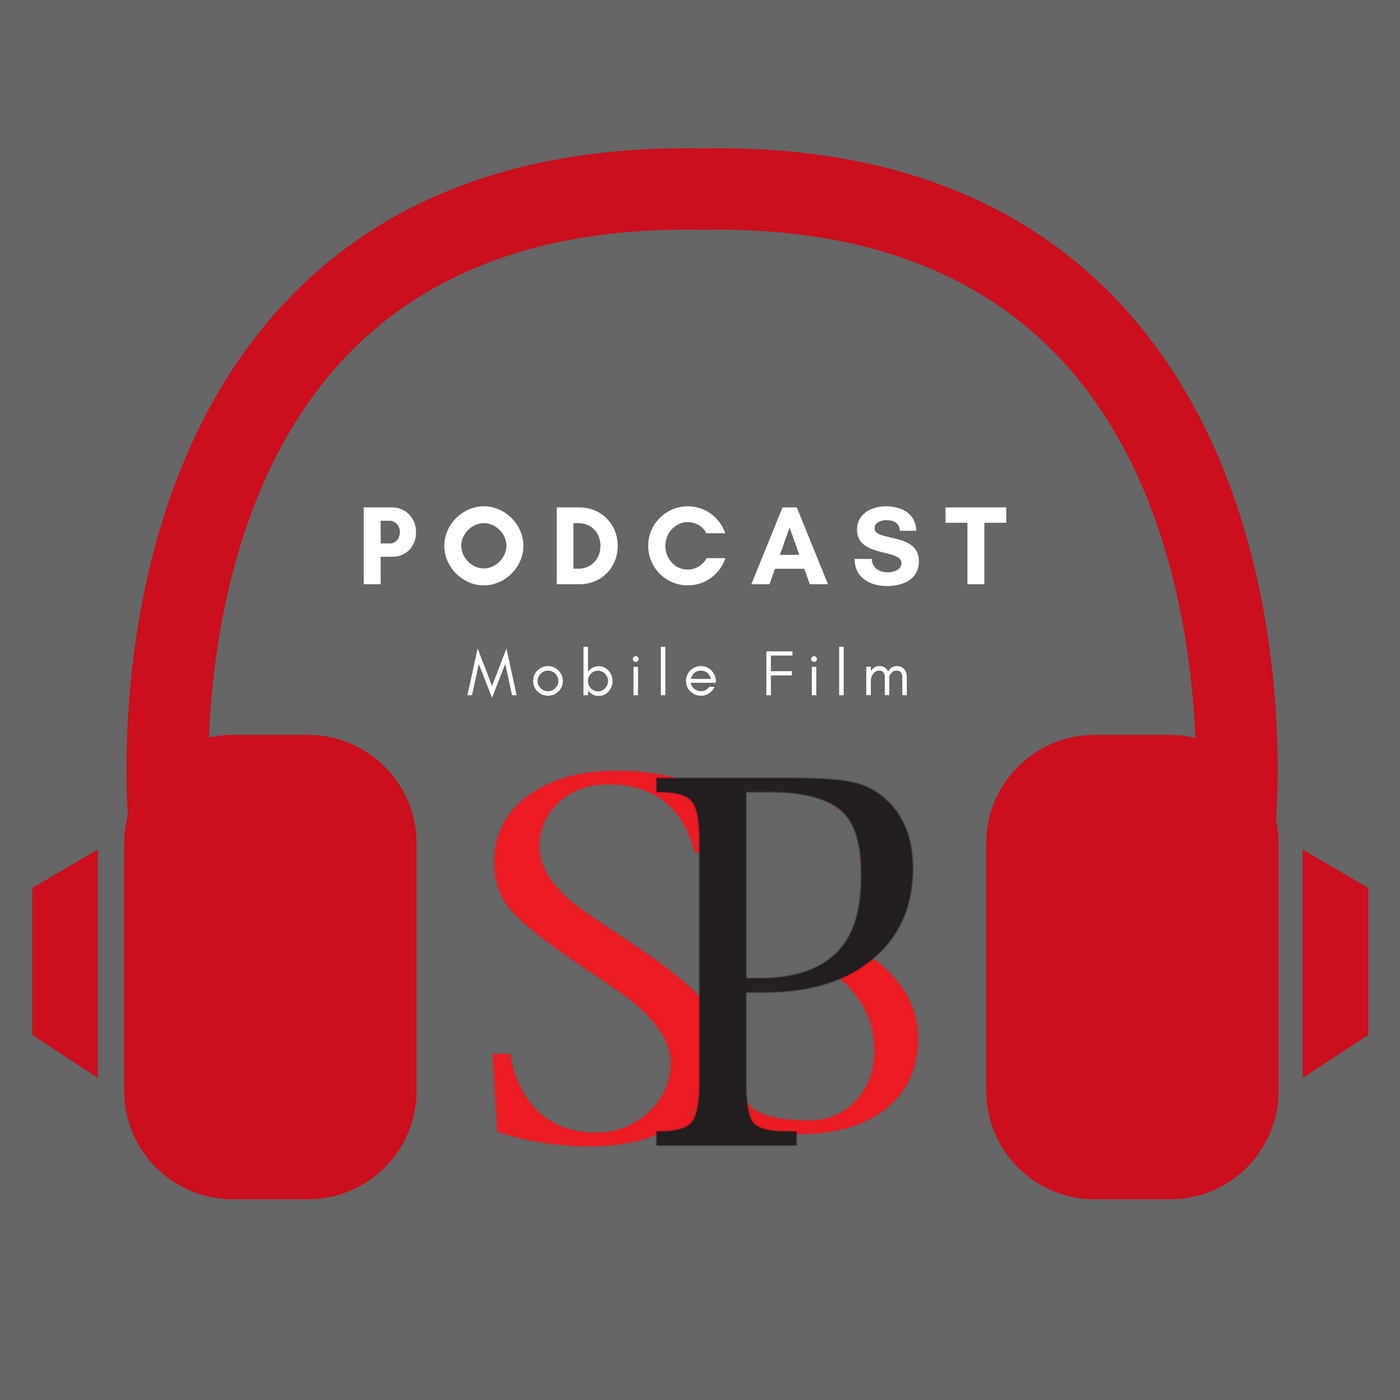 Smartphone Mobile Filmmaking Community Unites Episode 39